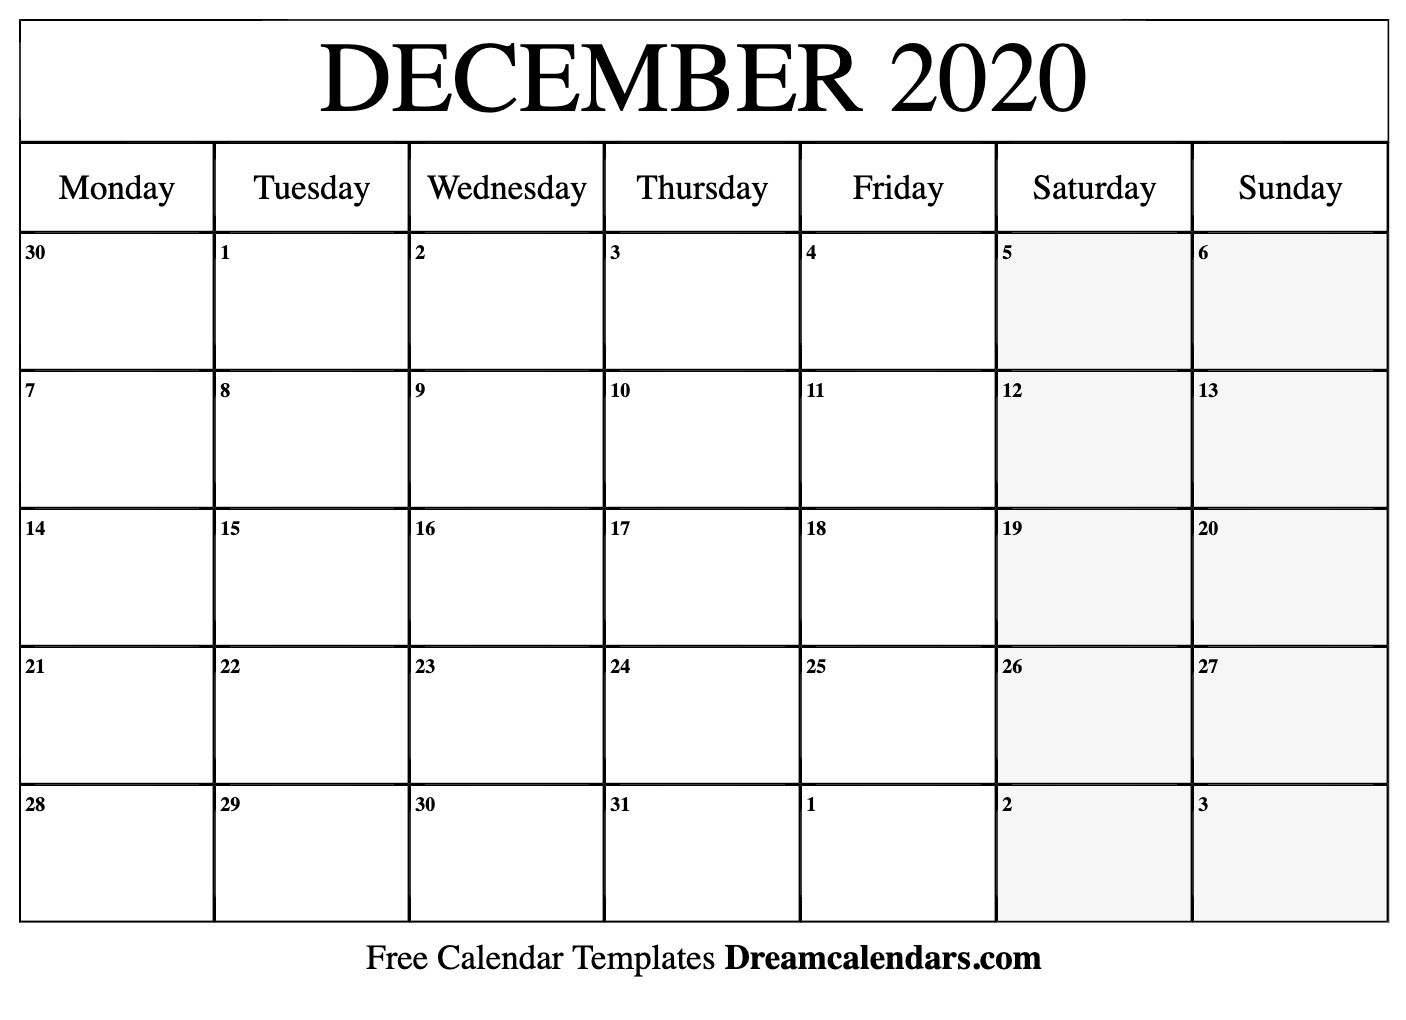 December 2020 Calendar – Example Calendar Printable pertaining to Depo Provera Calendar 2020